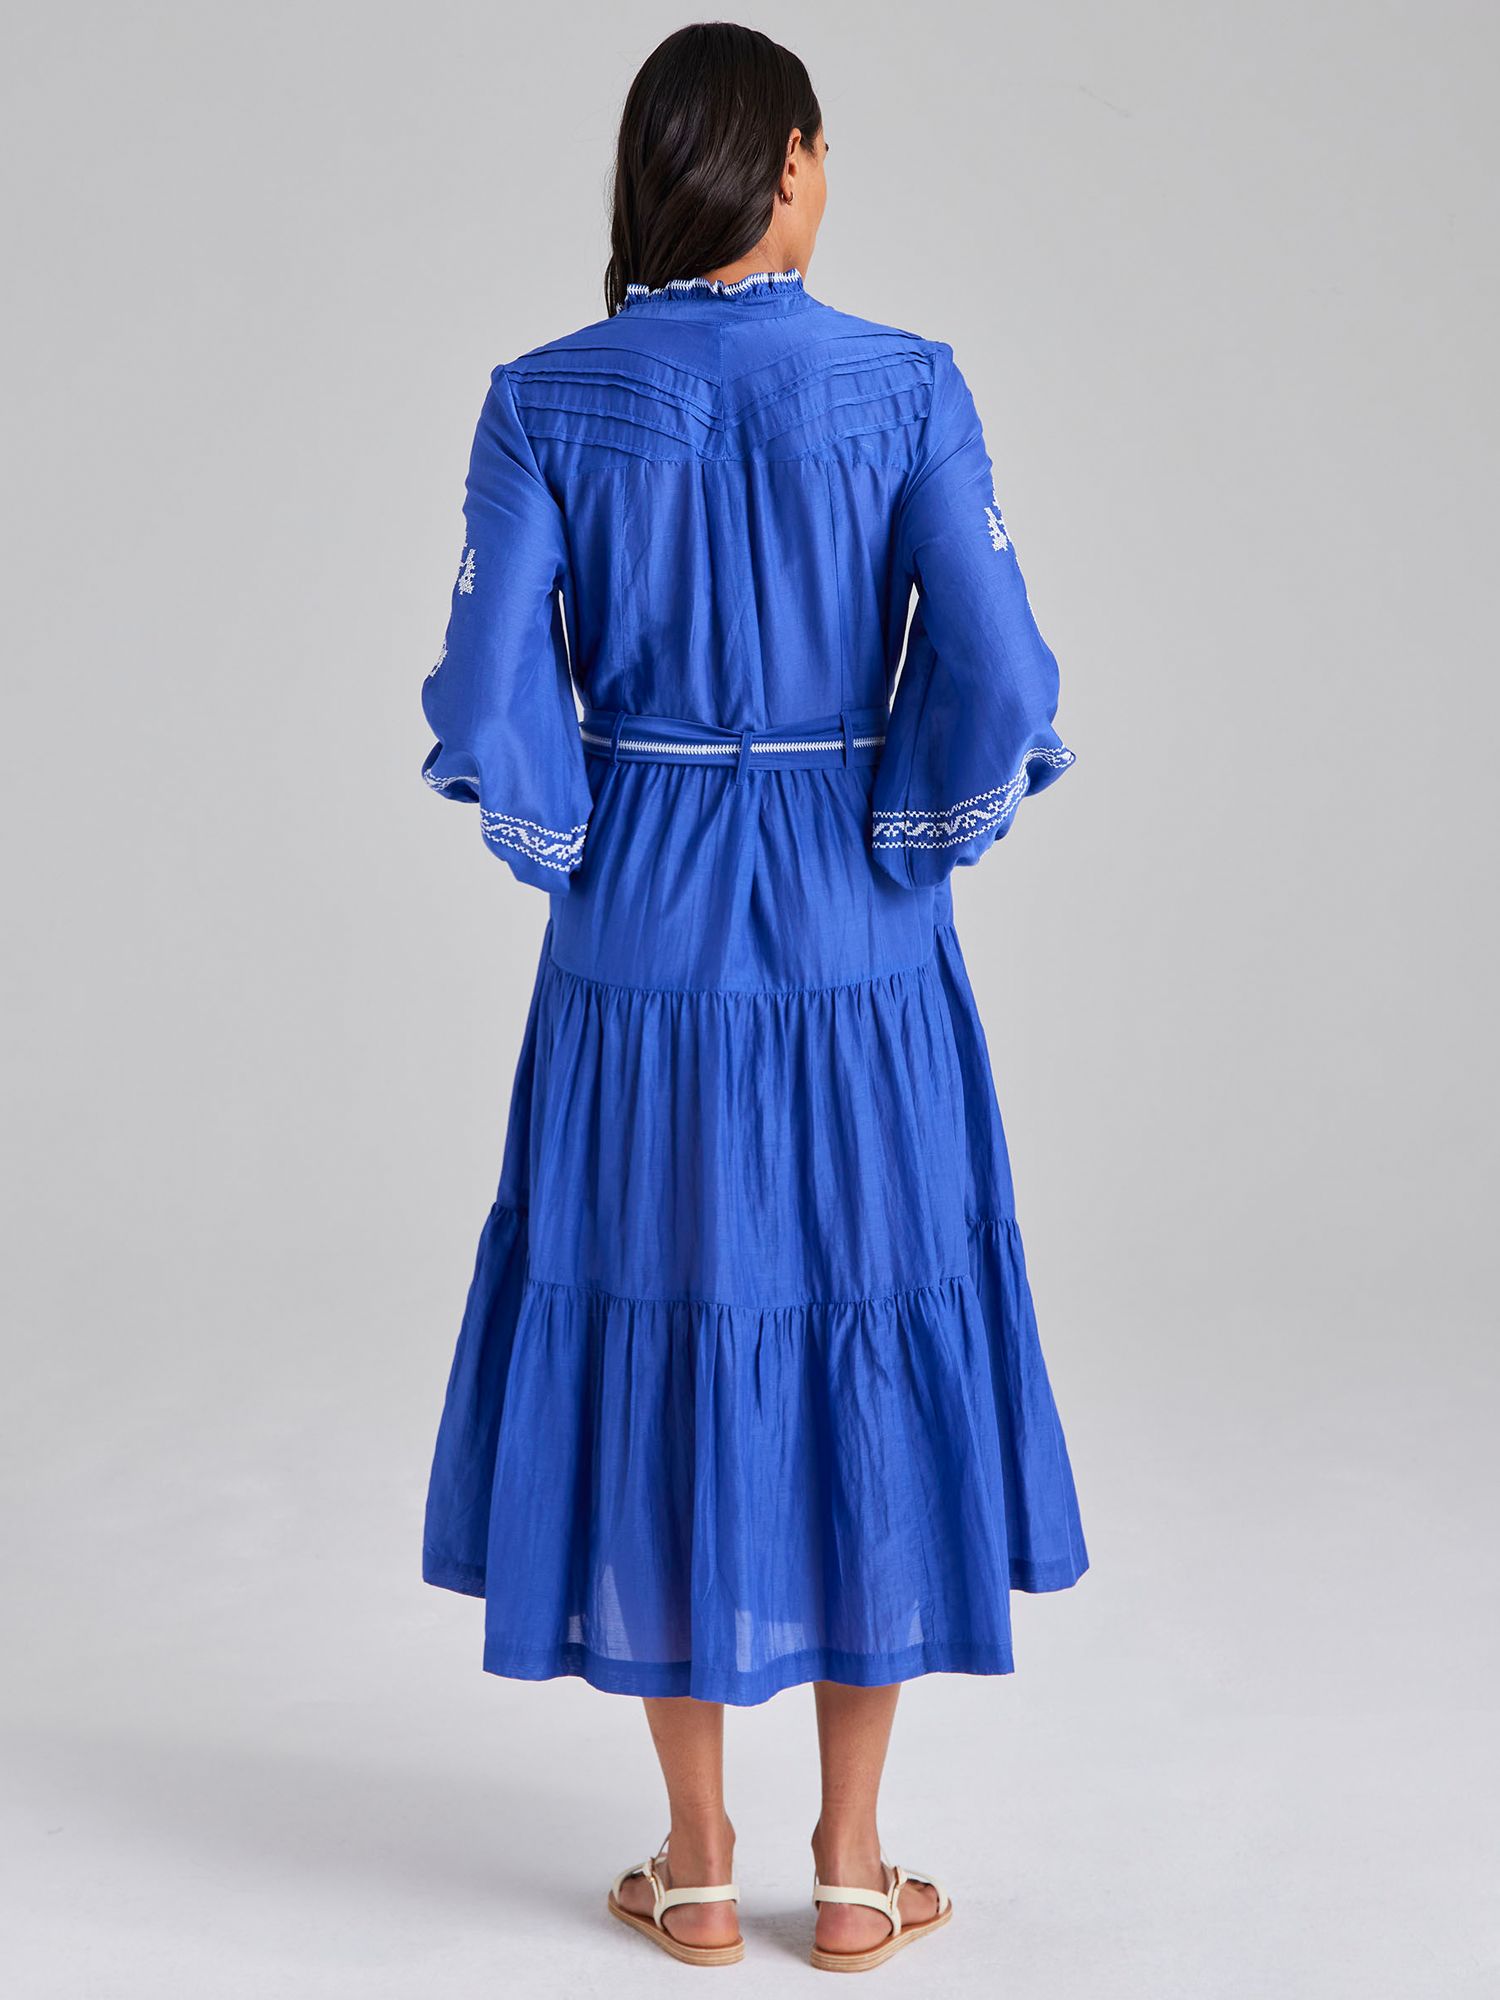 Cape Cove Cow Parsley Embroidered Cotton Silk Blend Midi Dress, Dazzling Blue, XL